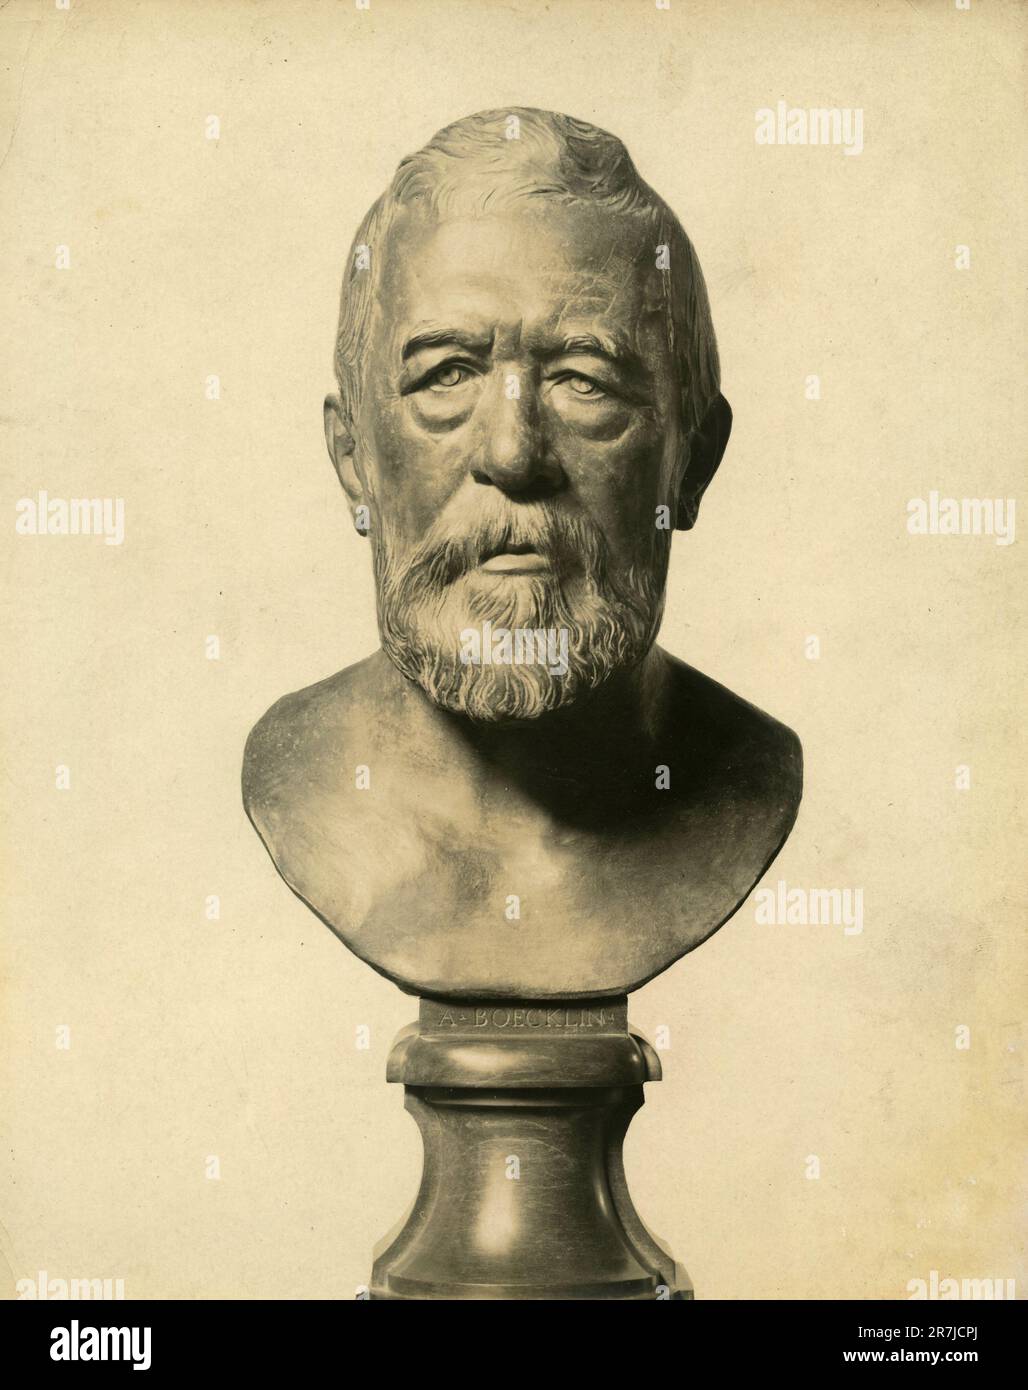 Buste du peintre suisse Arnold Boecklin, oeuvre du sculpteur allemand Adolf von Hildefìdrand, Allemagne 1904 Banque D'Images